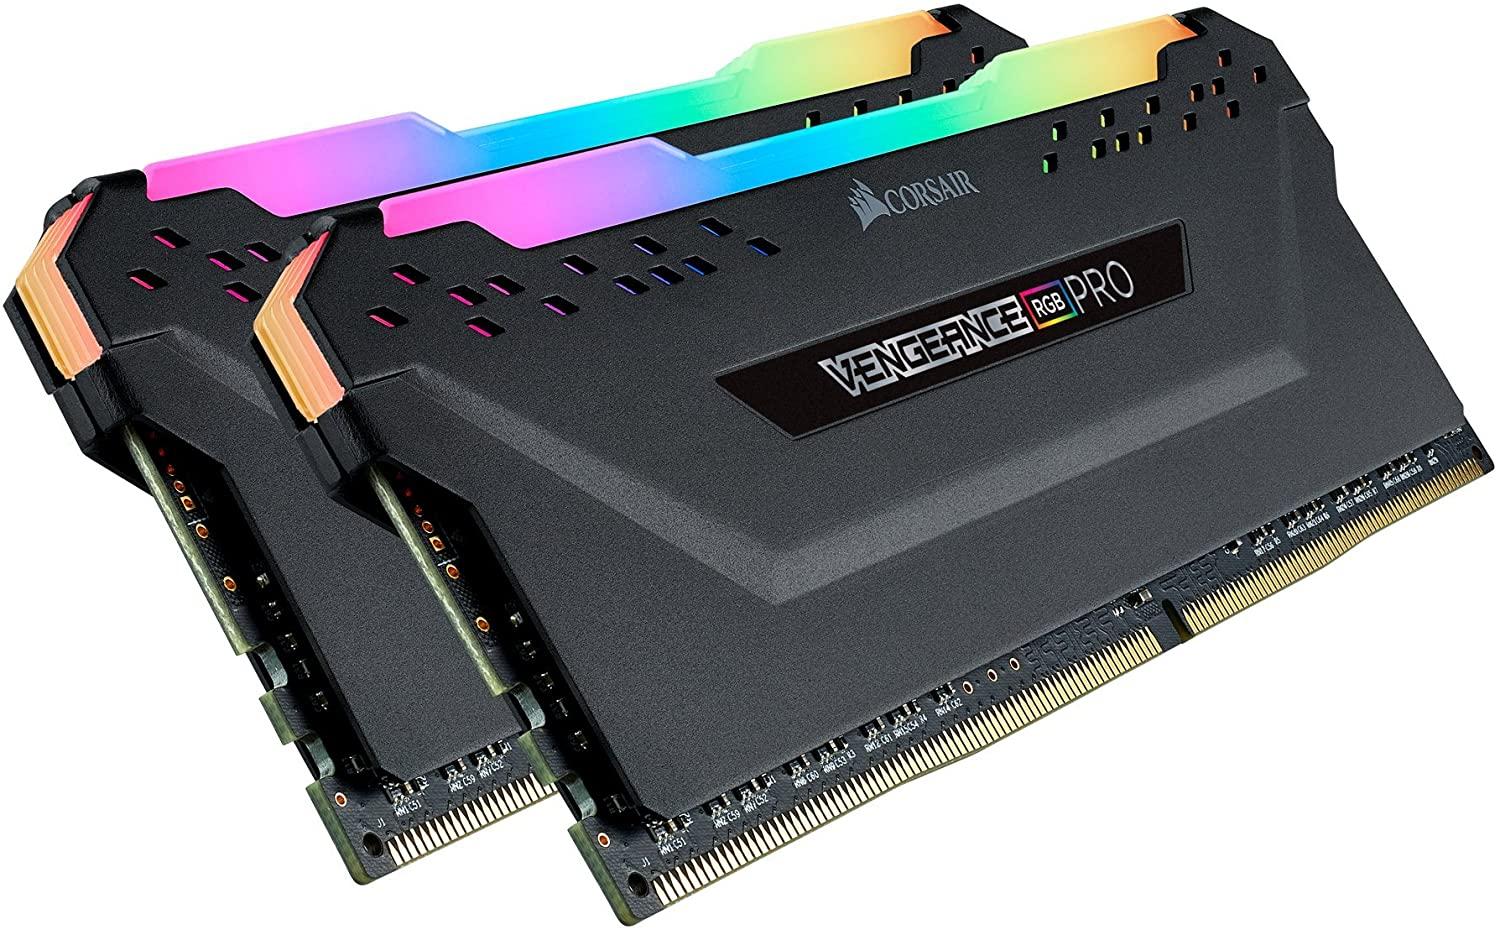 32GB Corsair Vengeance RGB Pro DDR4 3200 Desktop Memory for $124.99 Shipped